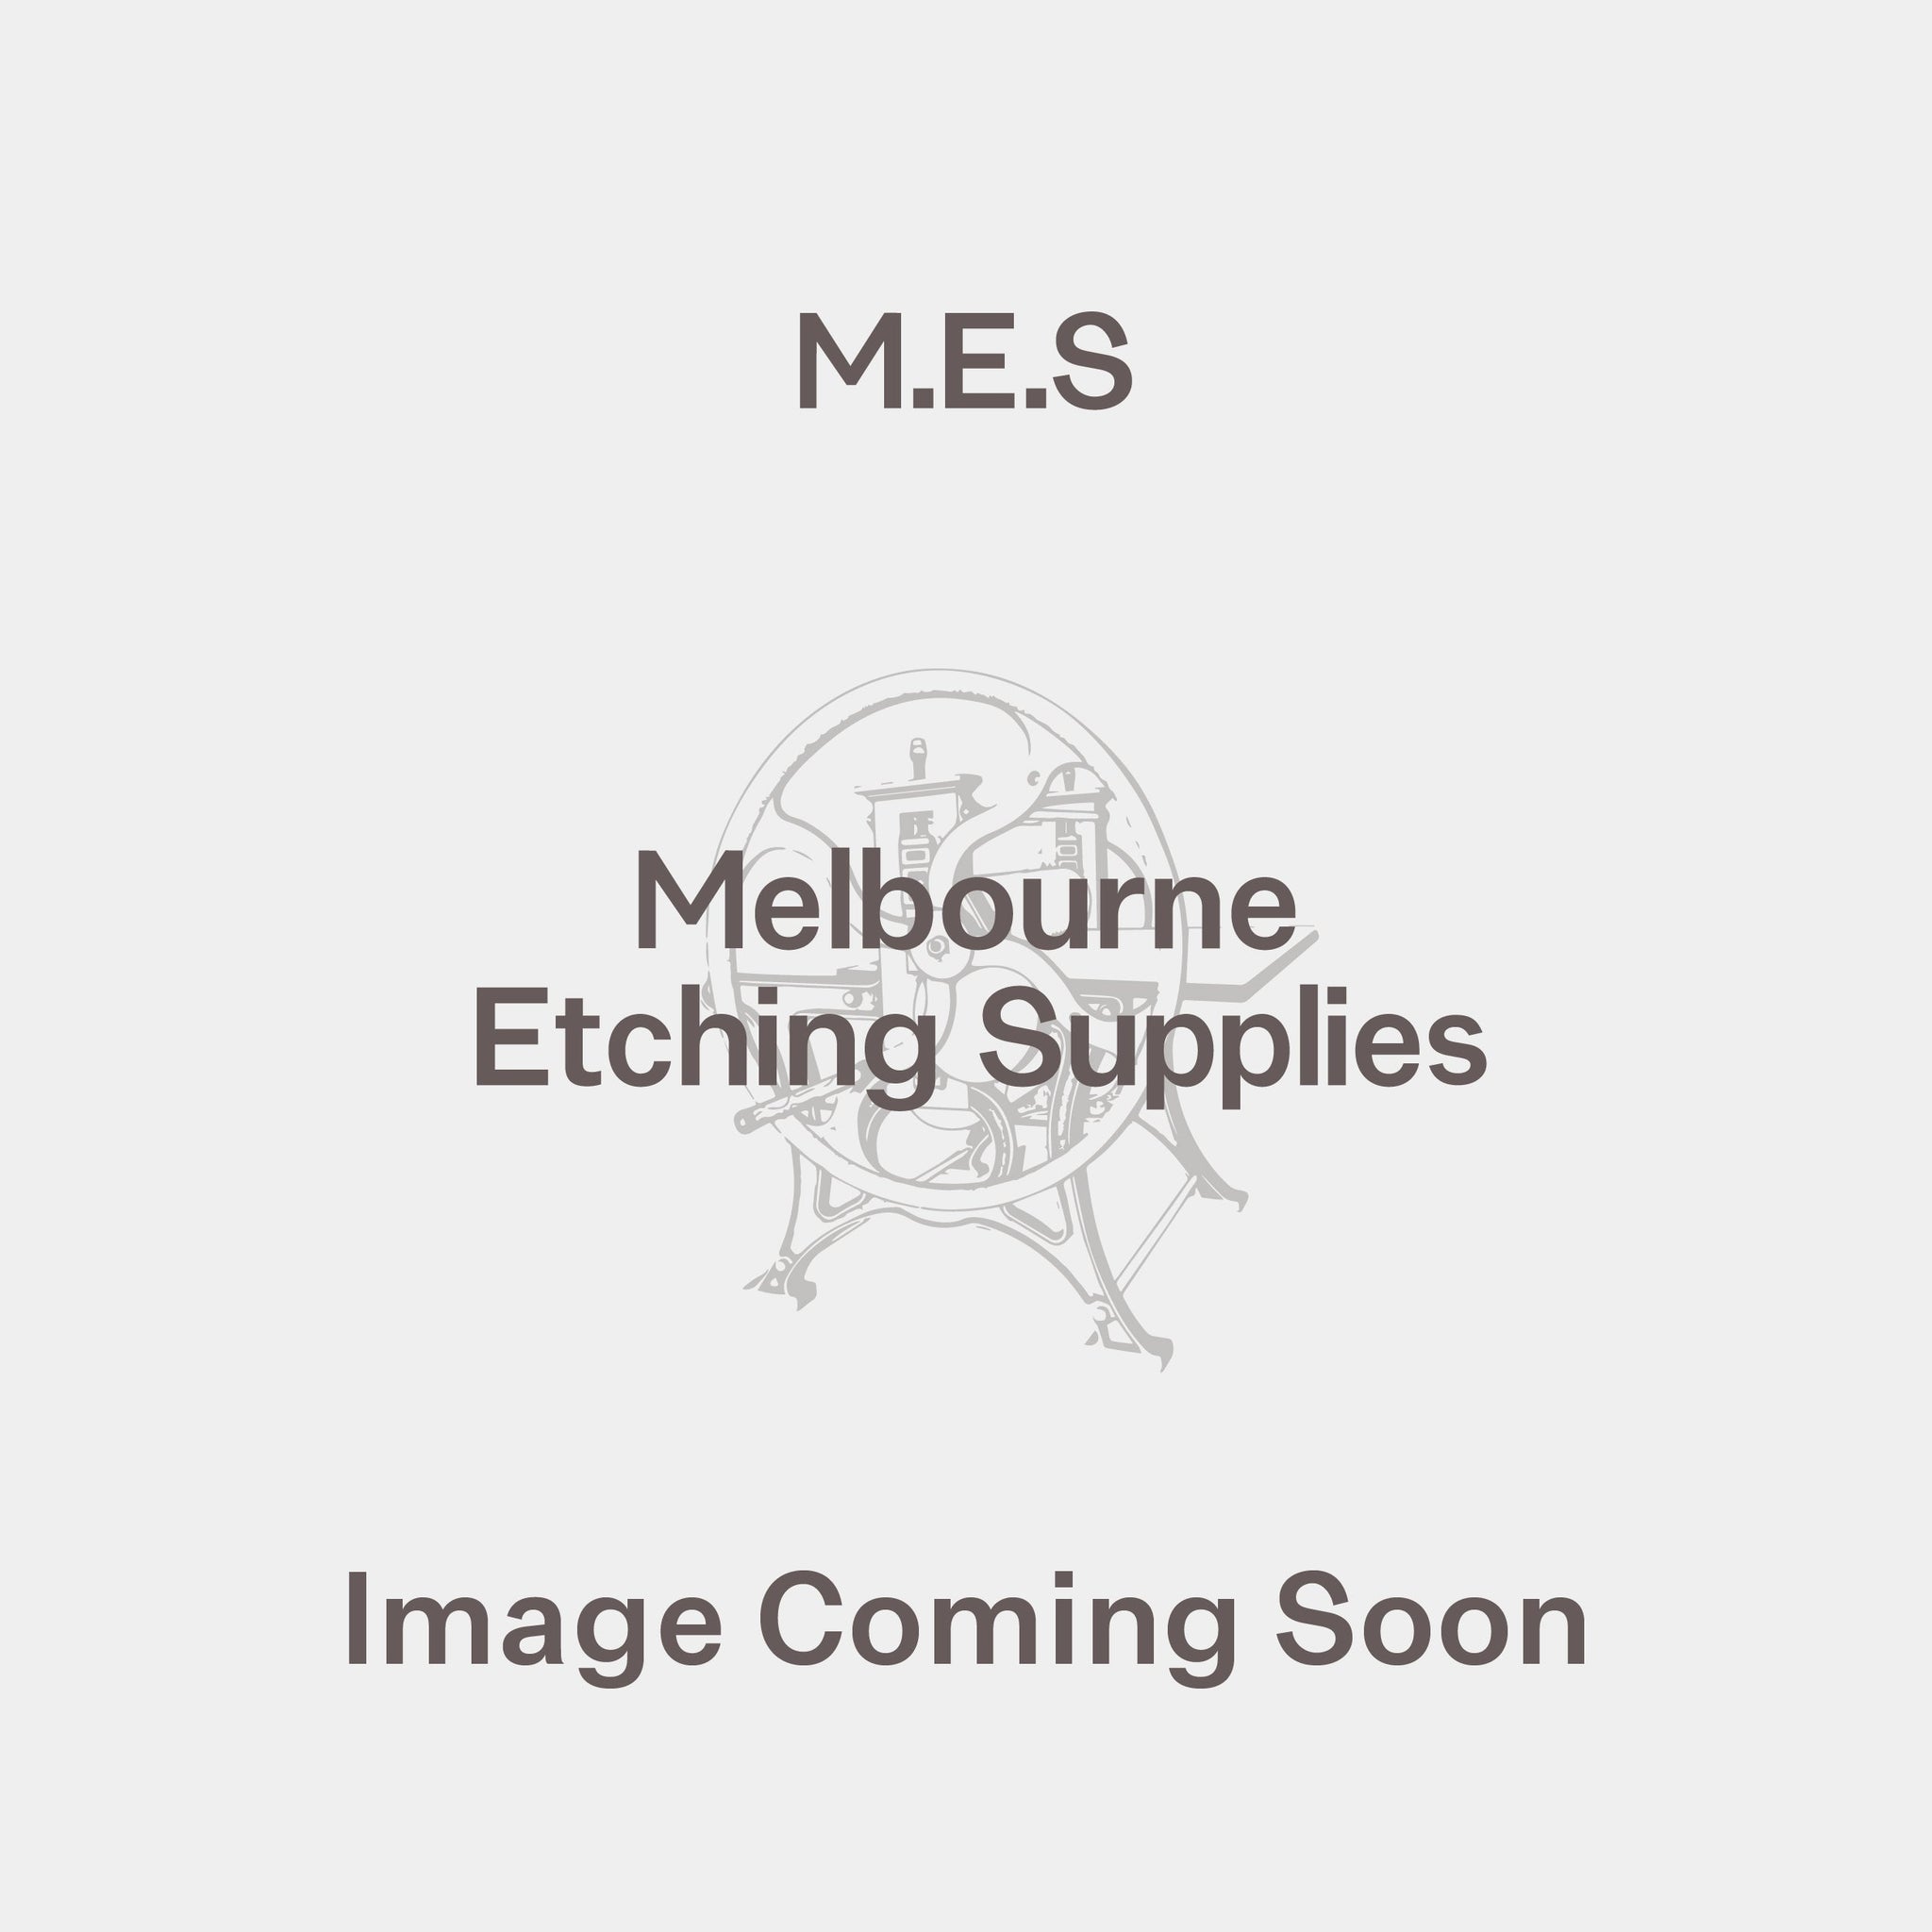 Awa - Melbourne Etching Supplies